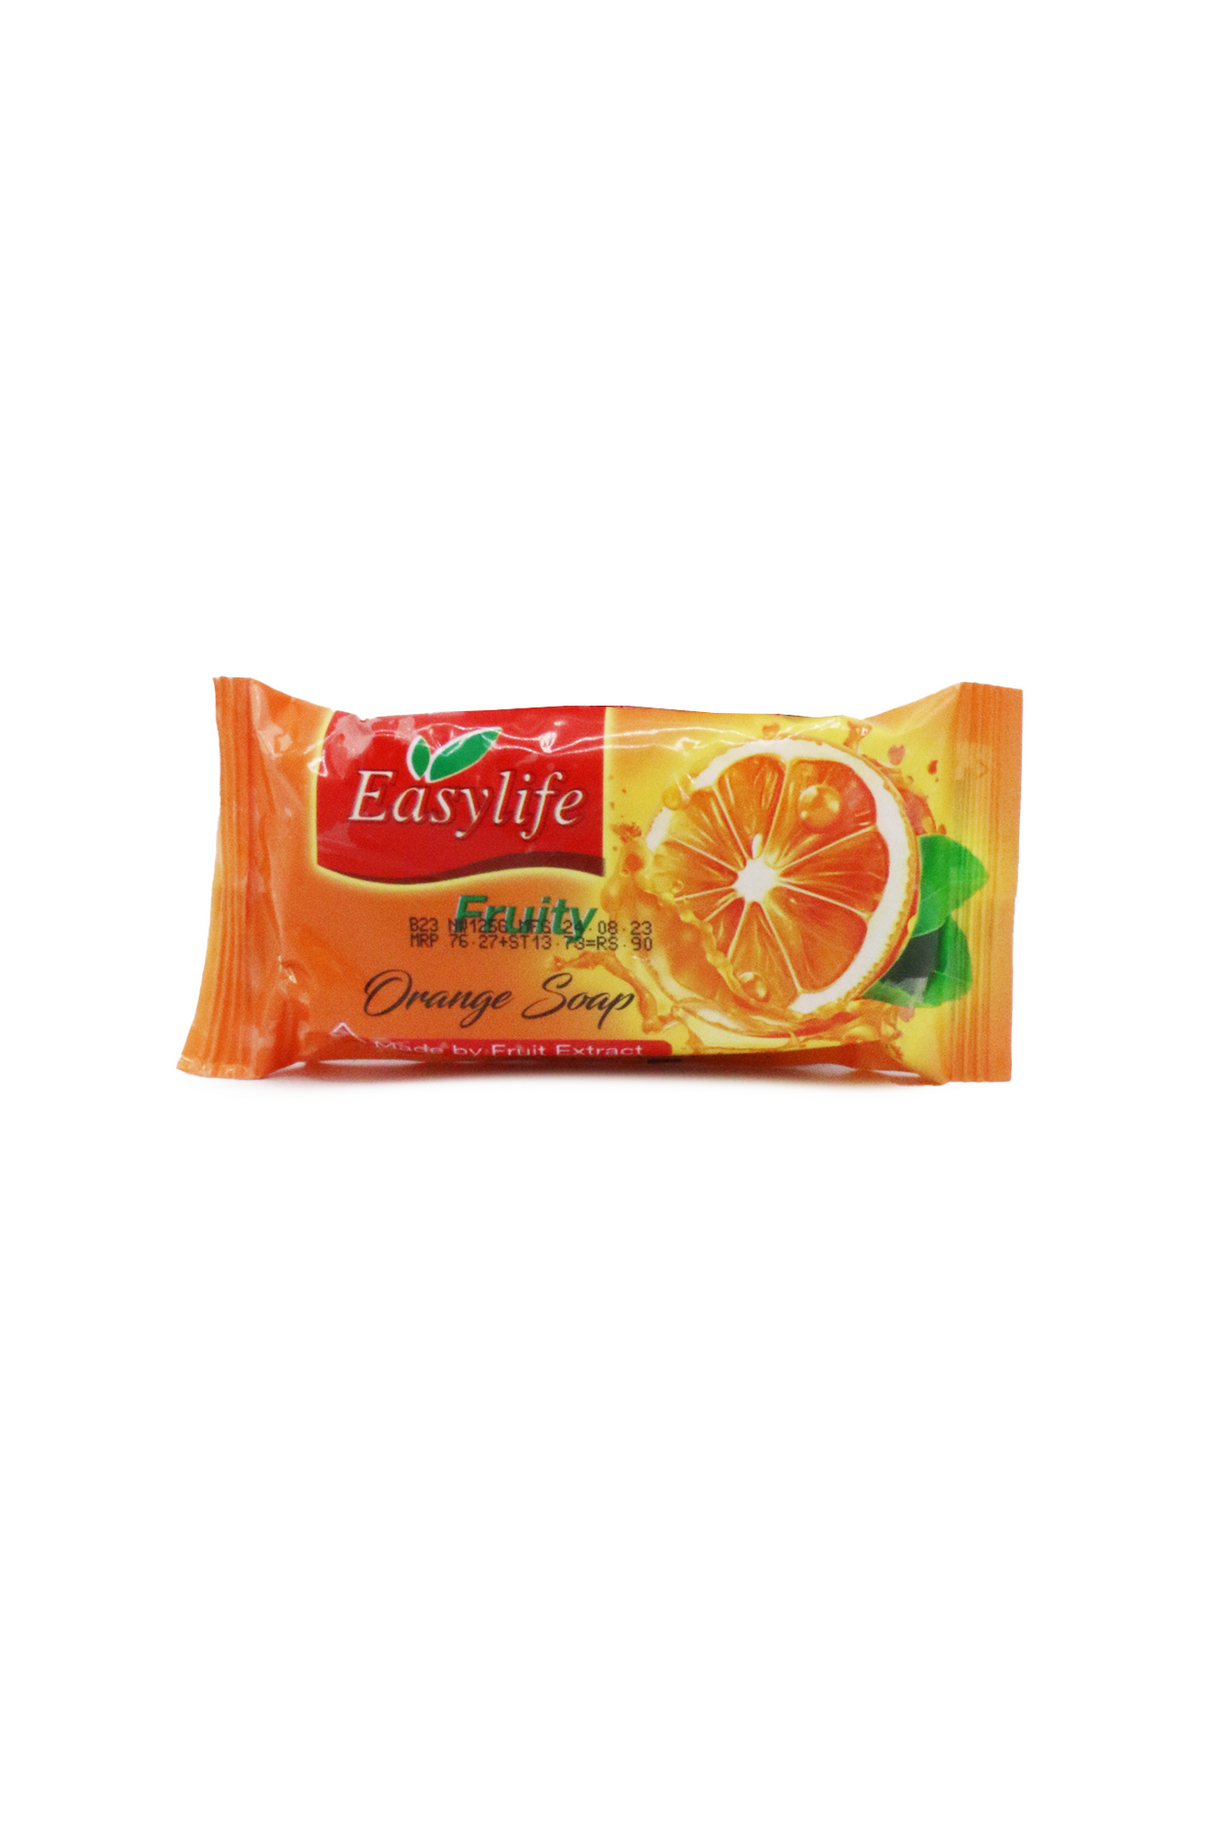 easylife orange soap 125g